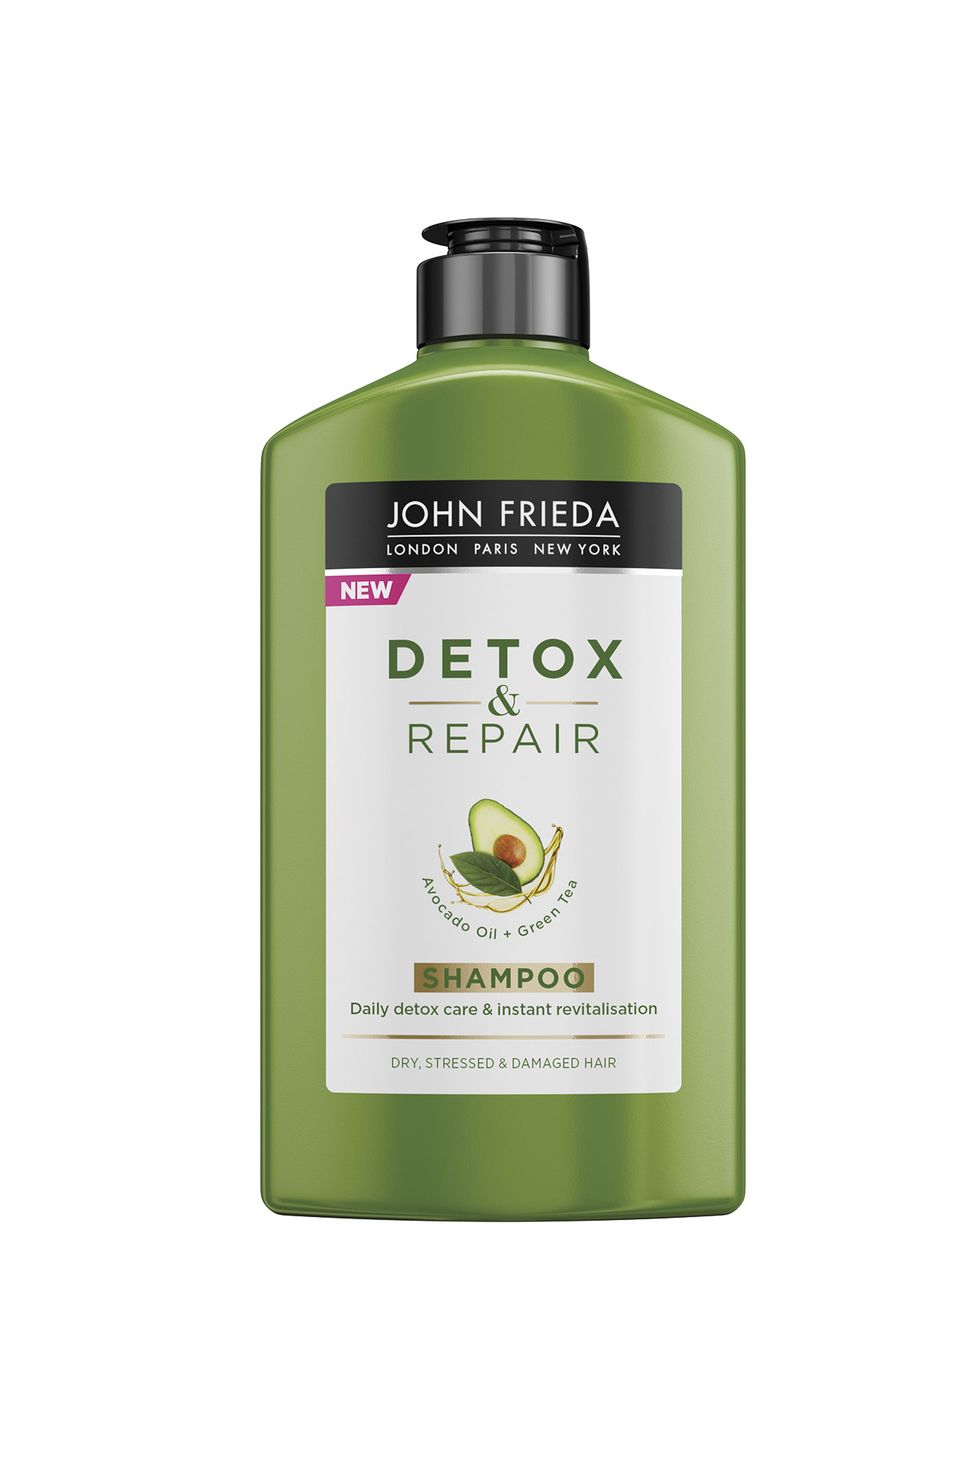 Champú Detox & Repair, de John Frieda